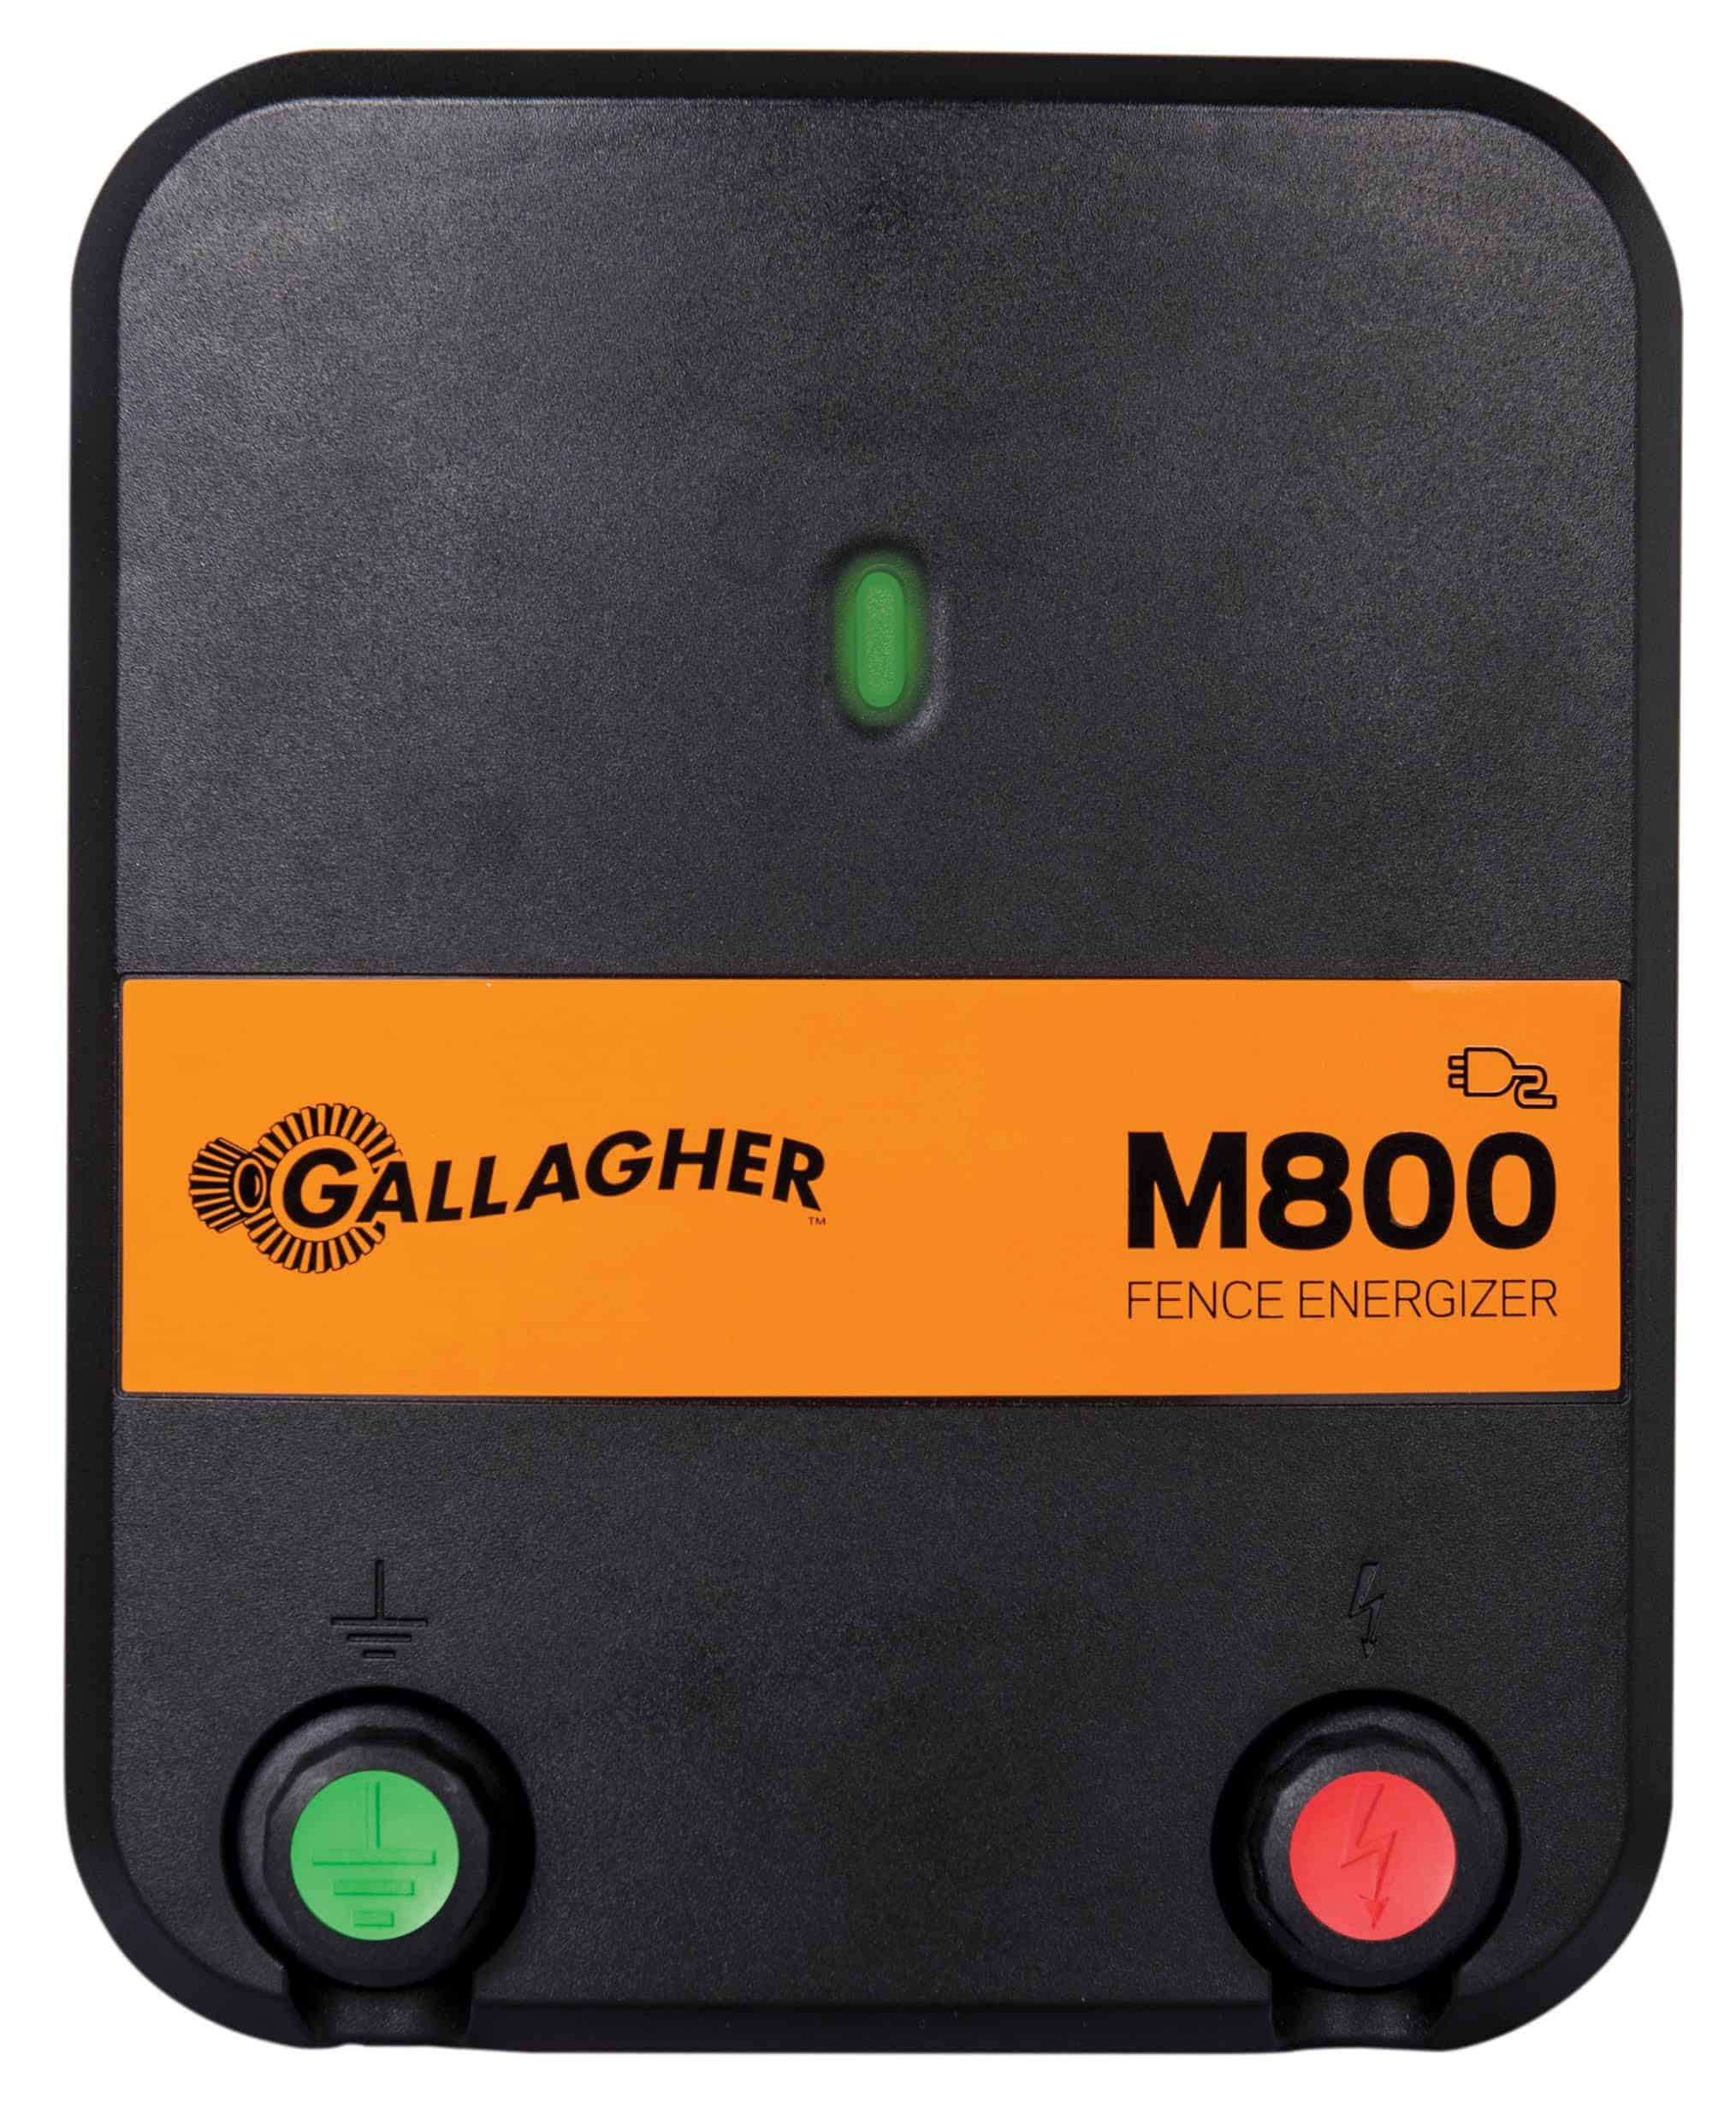 M800 PowerPlus 110-volt Energizer